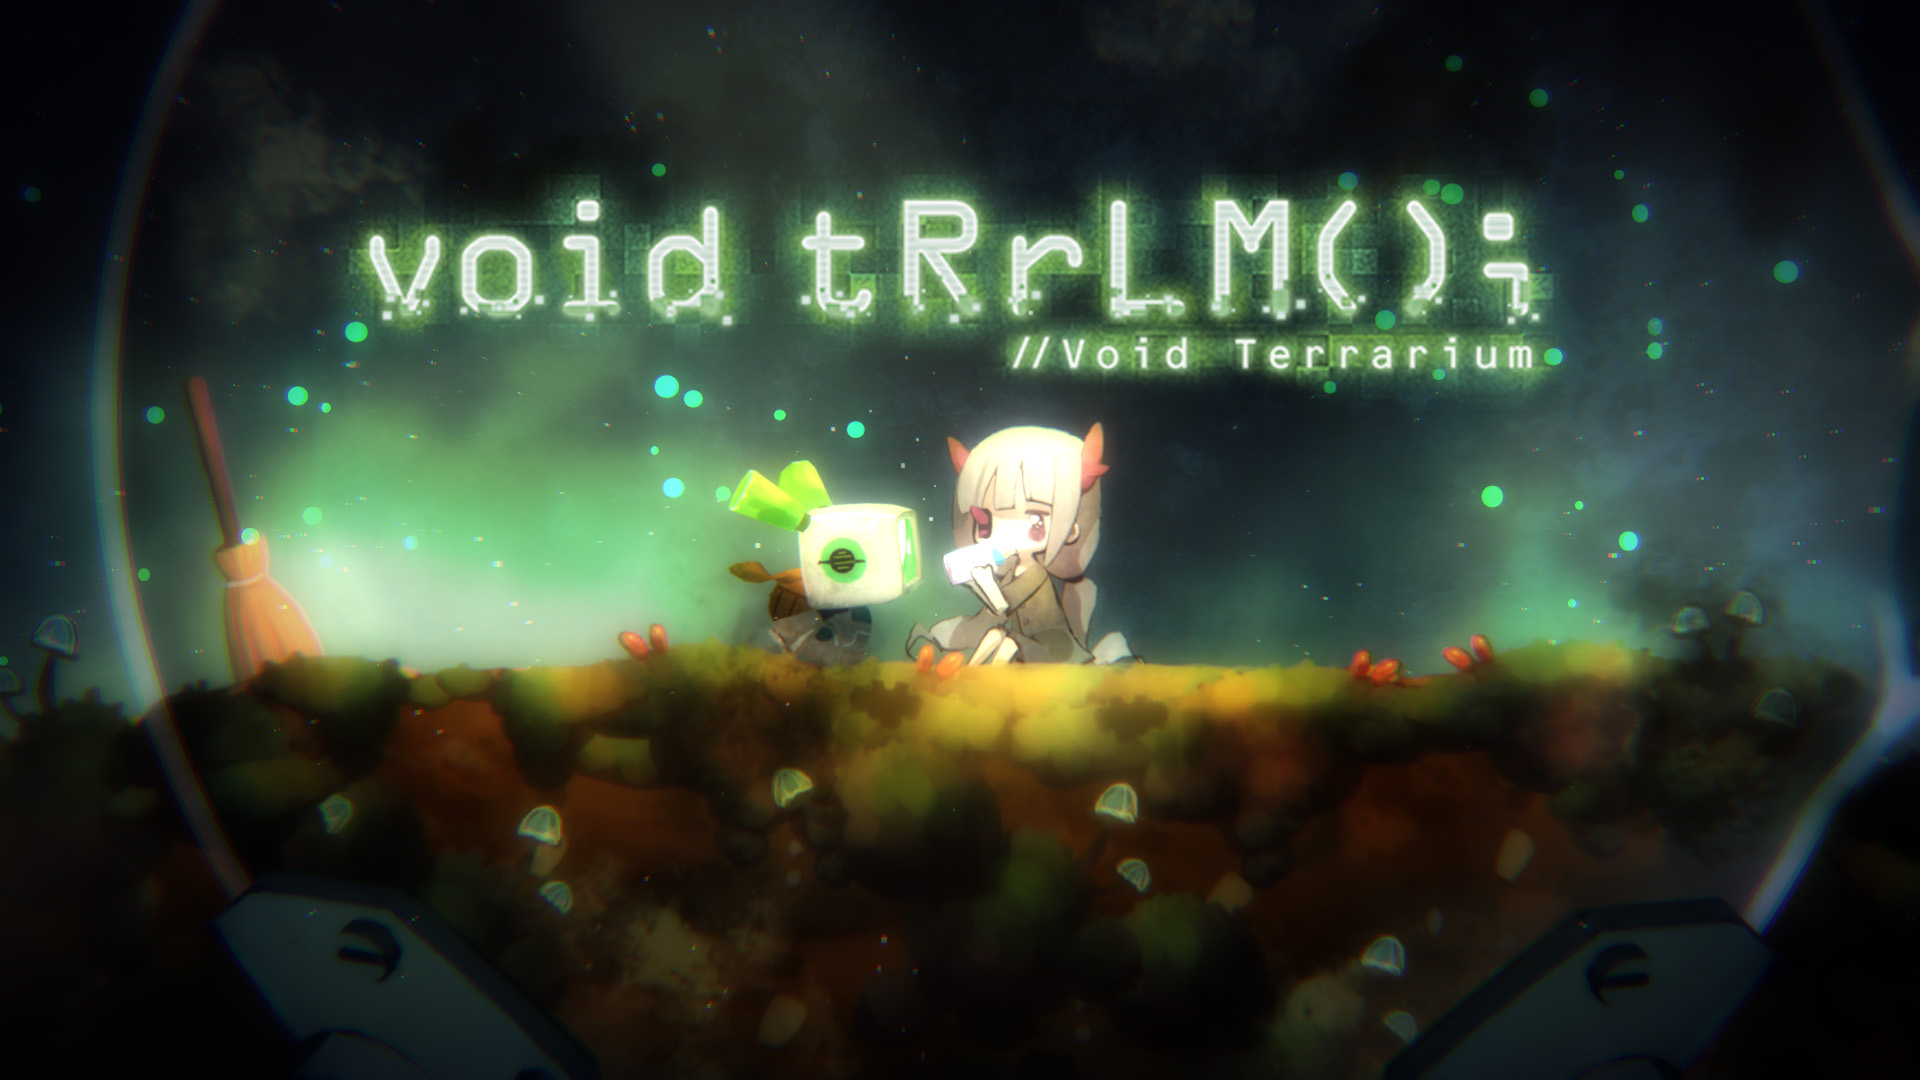 Análisis de void tRrLM(); //Void Terrarium